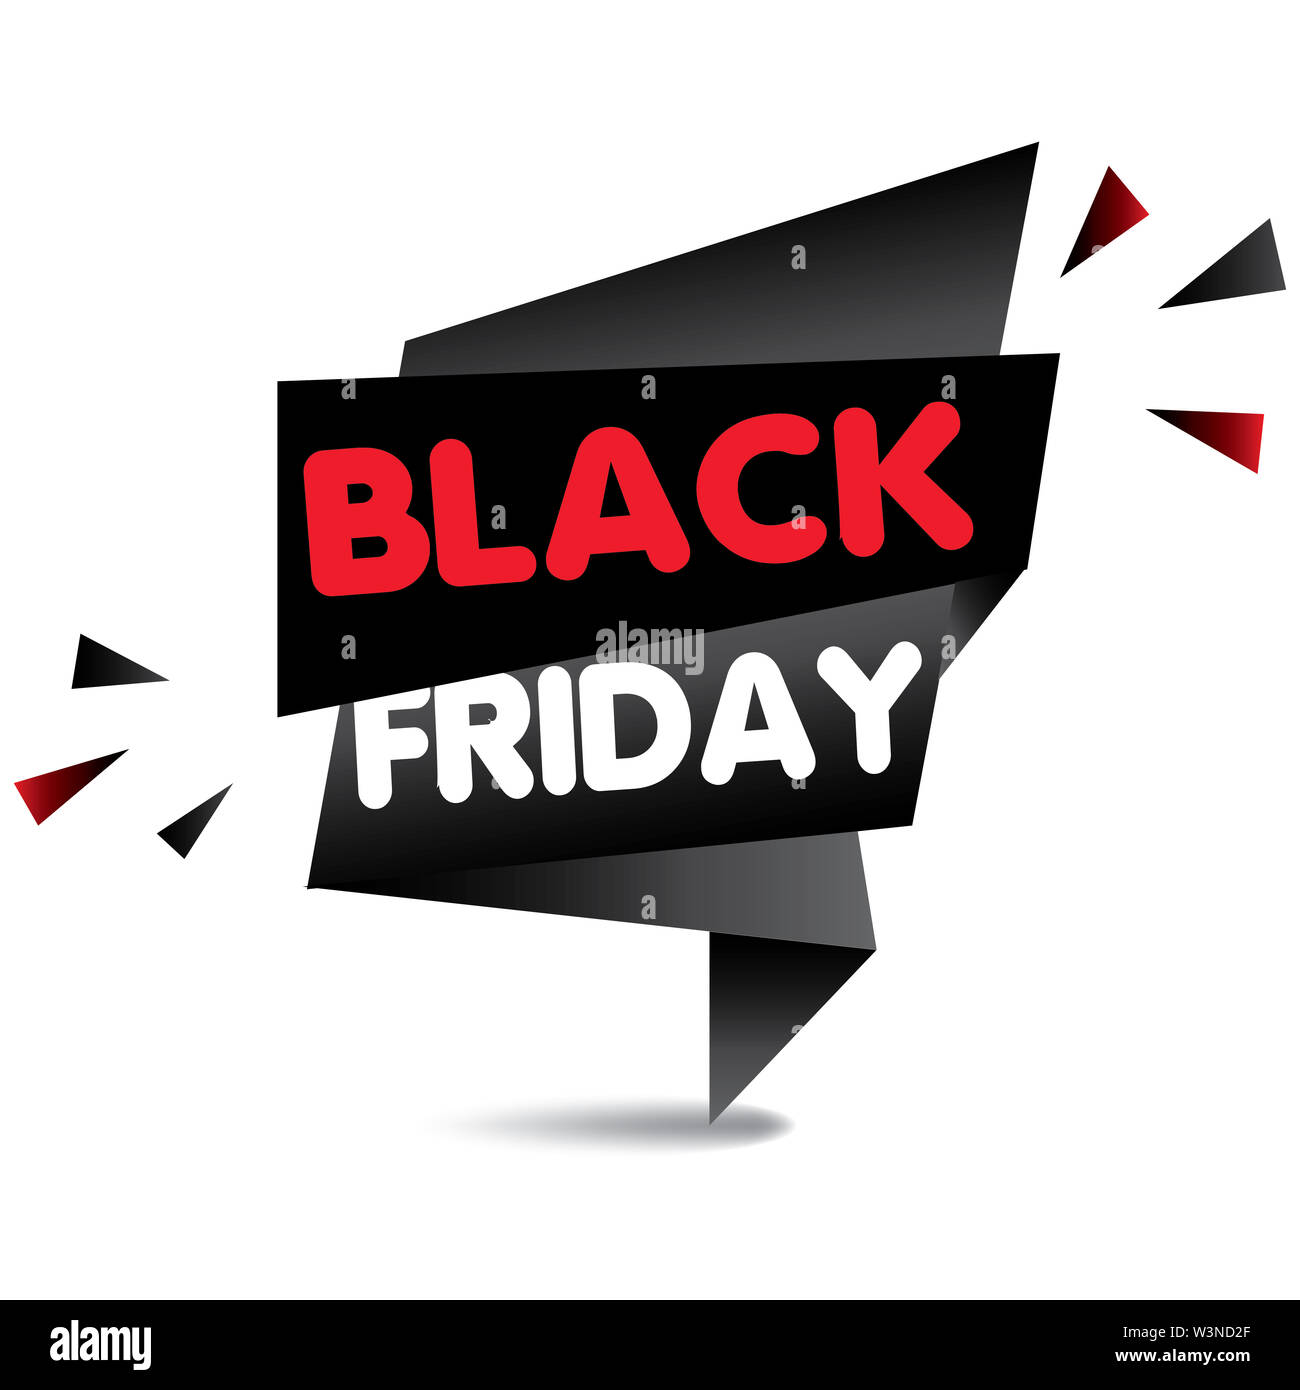 Black Friday Offer tag vector illustration Stock Photo